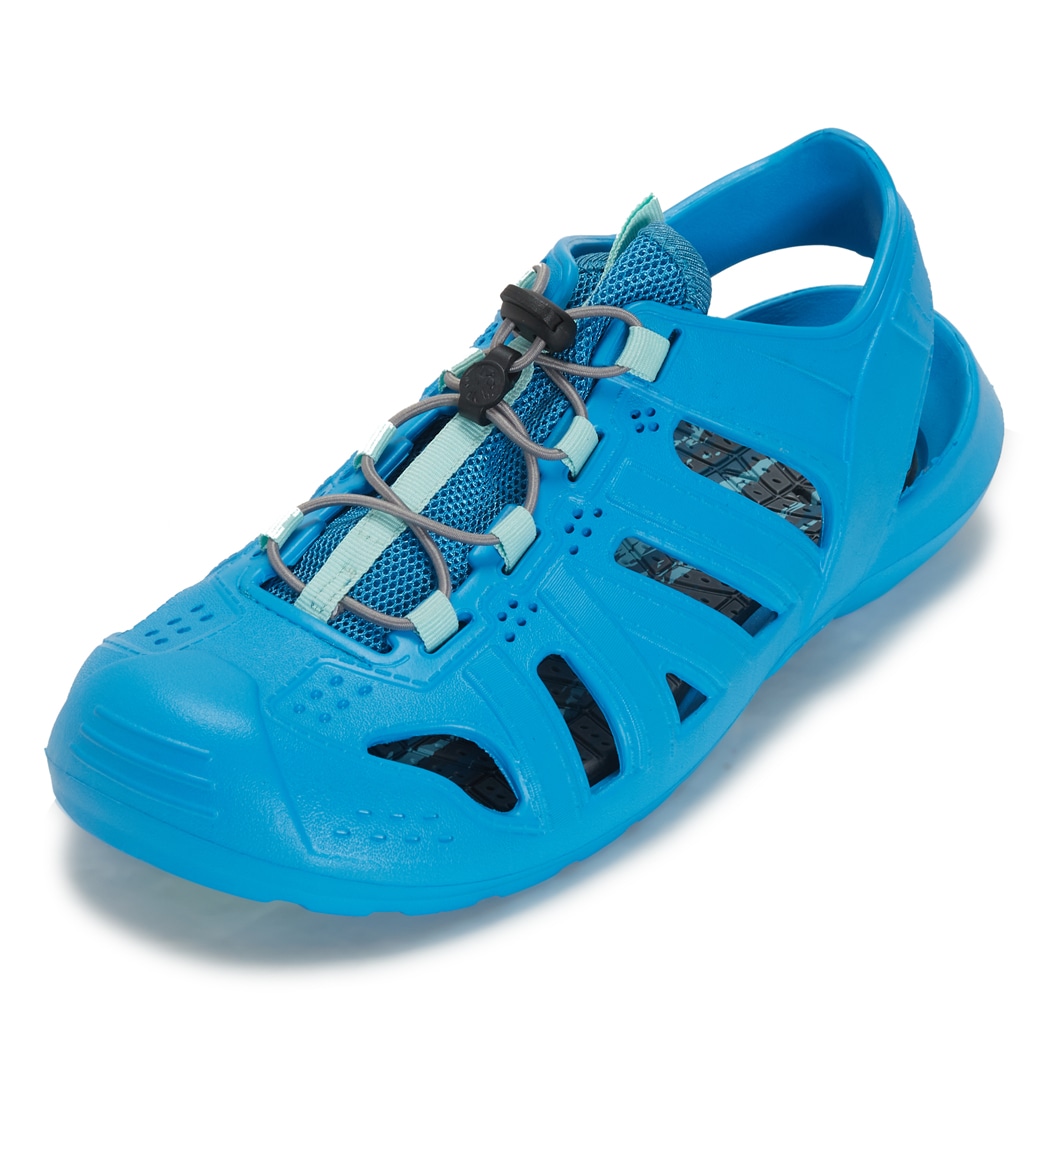 Northside Women's Pacific Drift Water Shoes - Teal/Aqua 6 - Swimoutlet.com